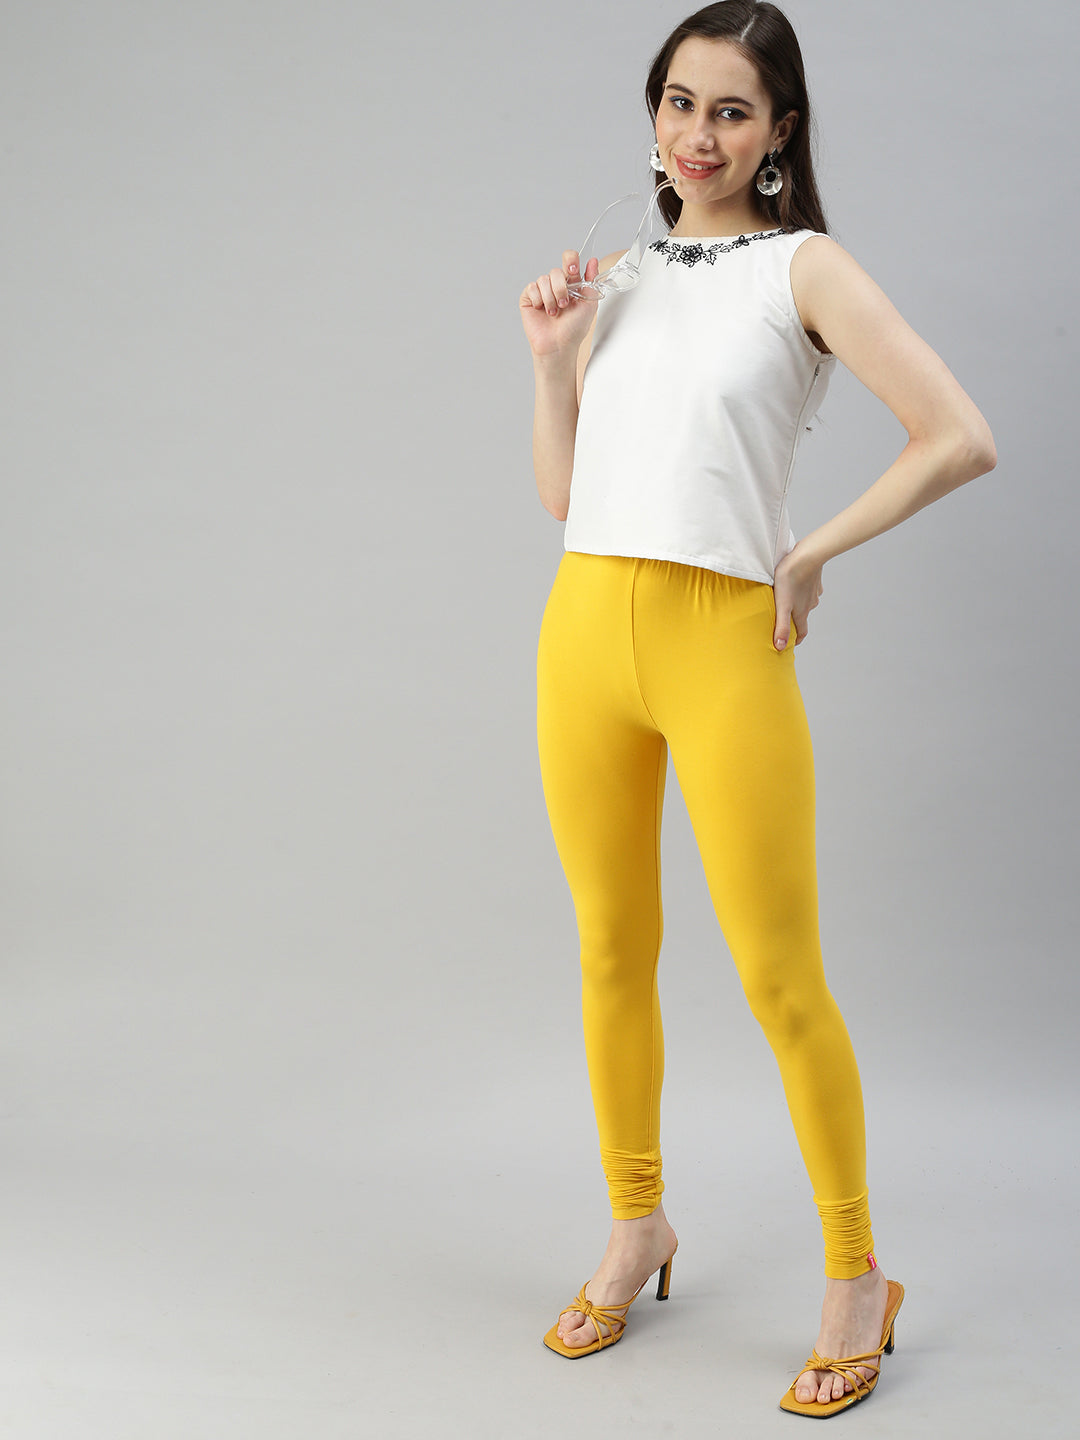 Buy Kanna Fabric Women Mid Rise Cotton Churidar Length Leggings - M-White Lemon  YELLOW-30 at Amazon.in